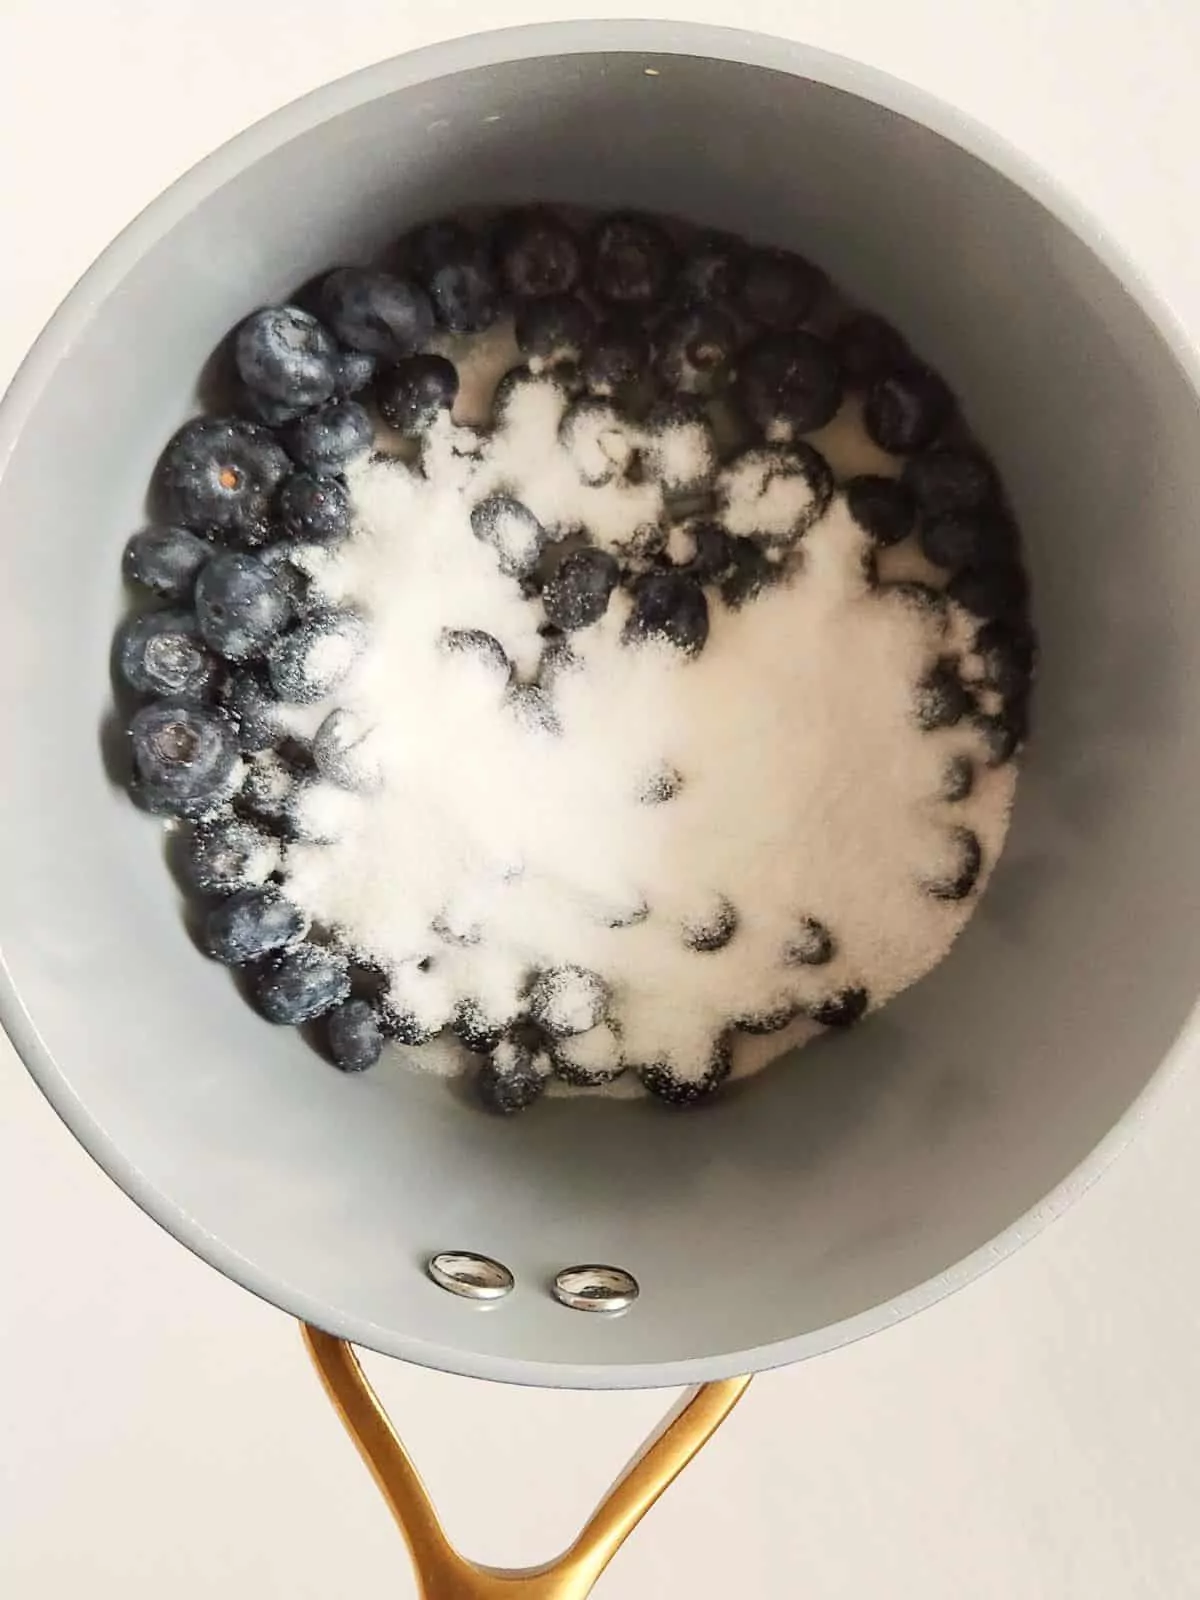 Blueberries and sugar in saucepan.